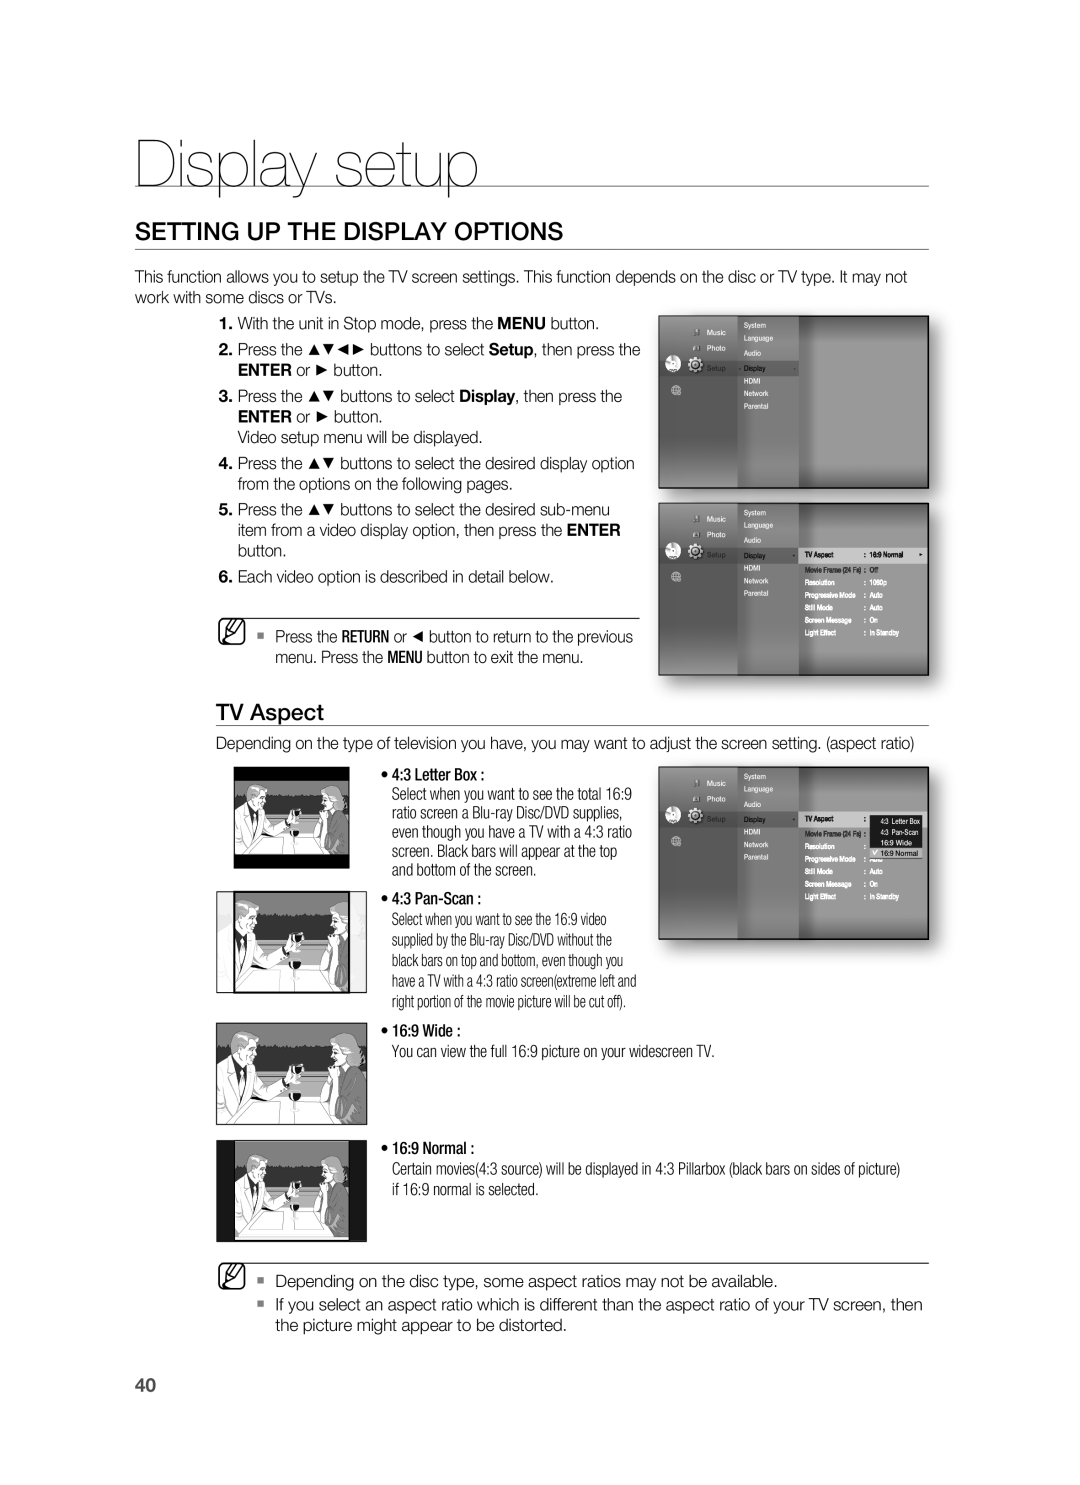 Samsung HT-BD8200 user manual Display setup, Setting Up The Display Options, TV Aspect 